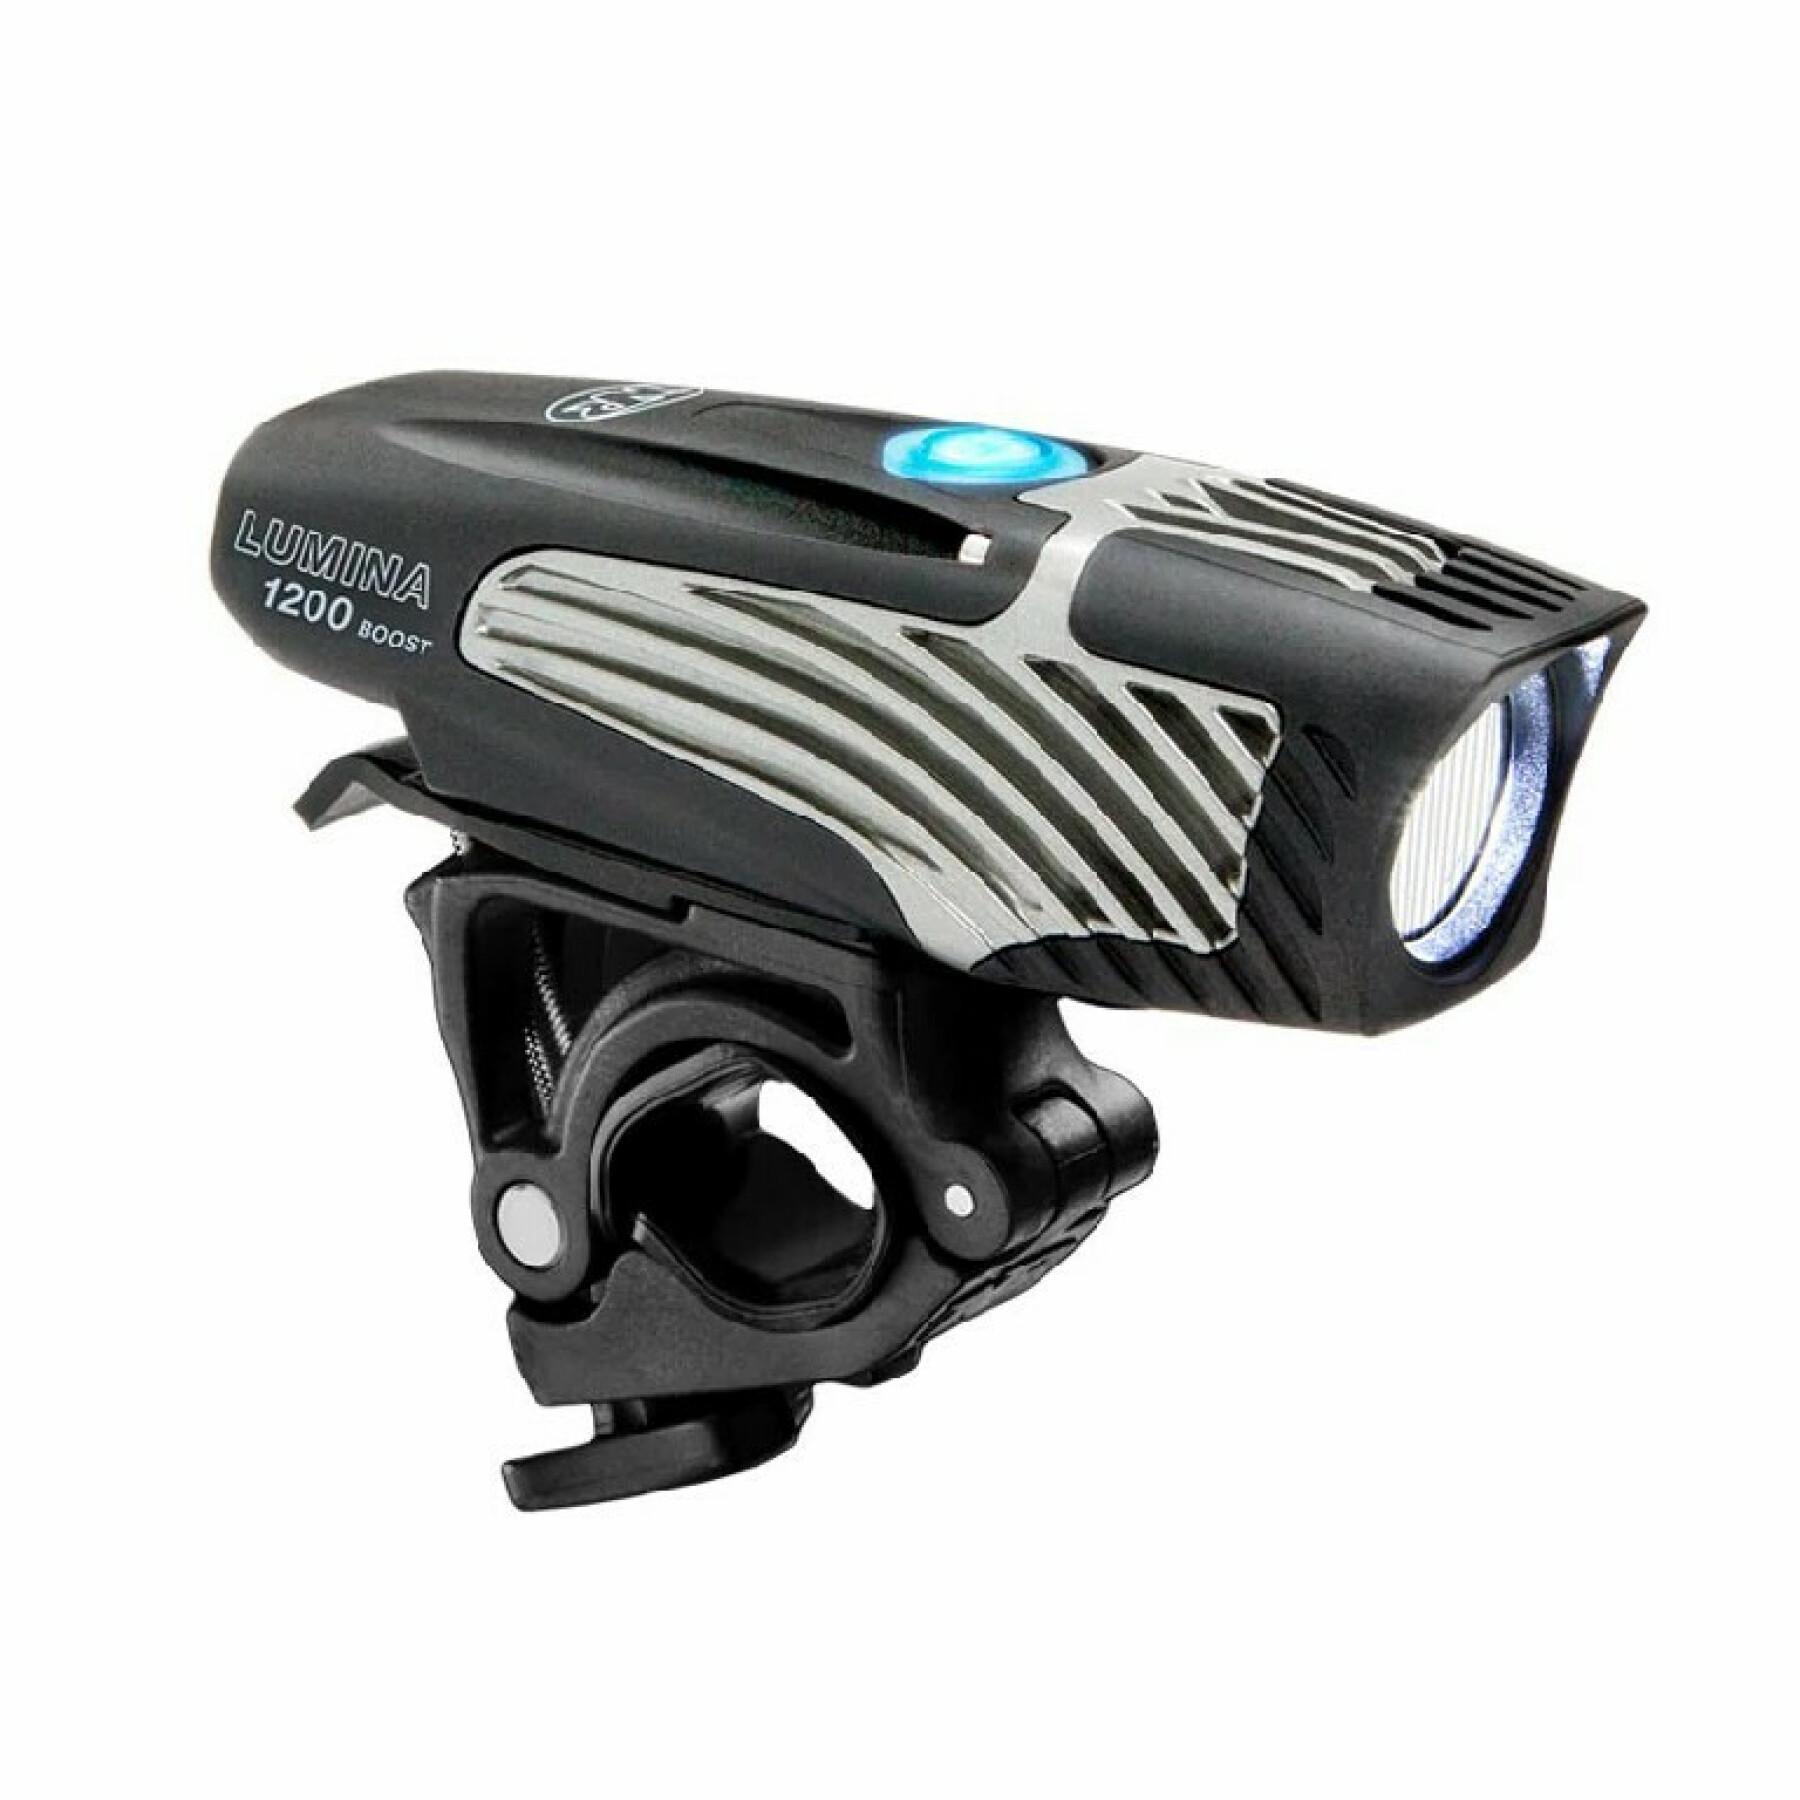 Lighting package Nite Rider Lumina 1200 boost & solas 250